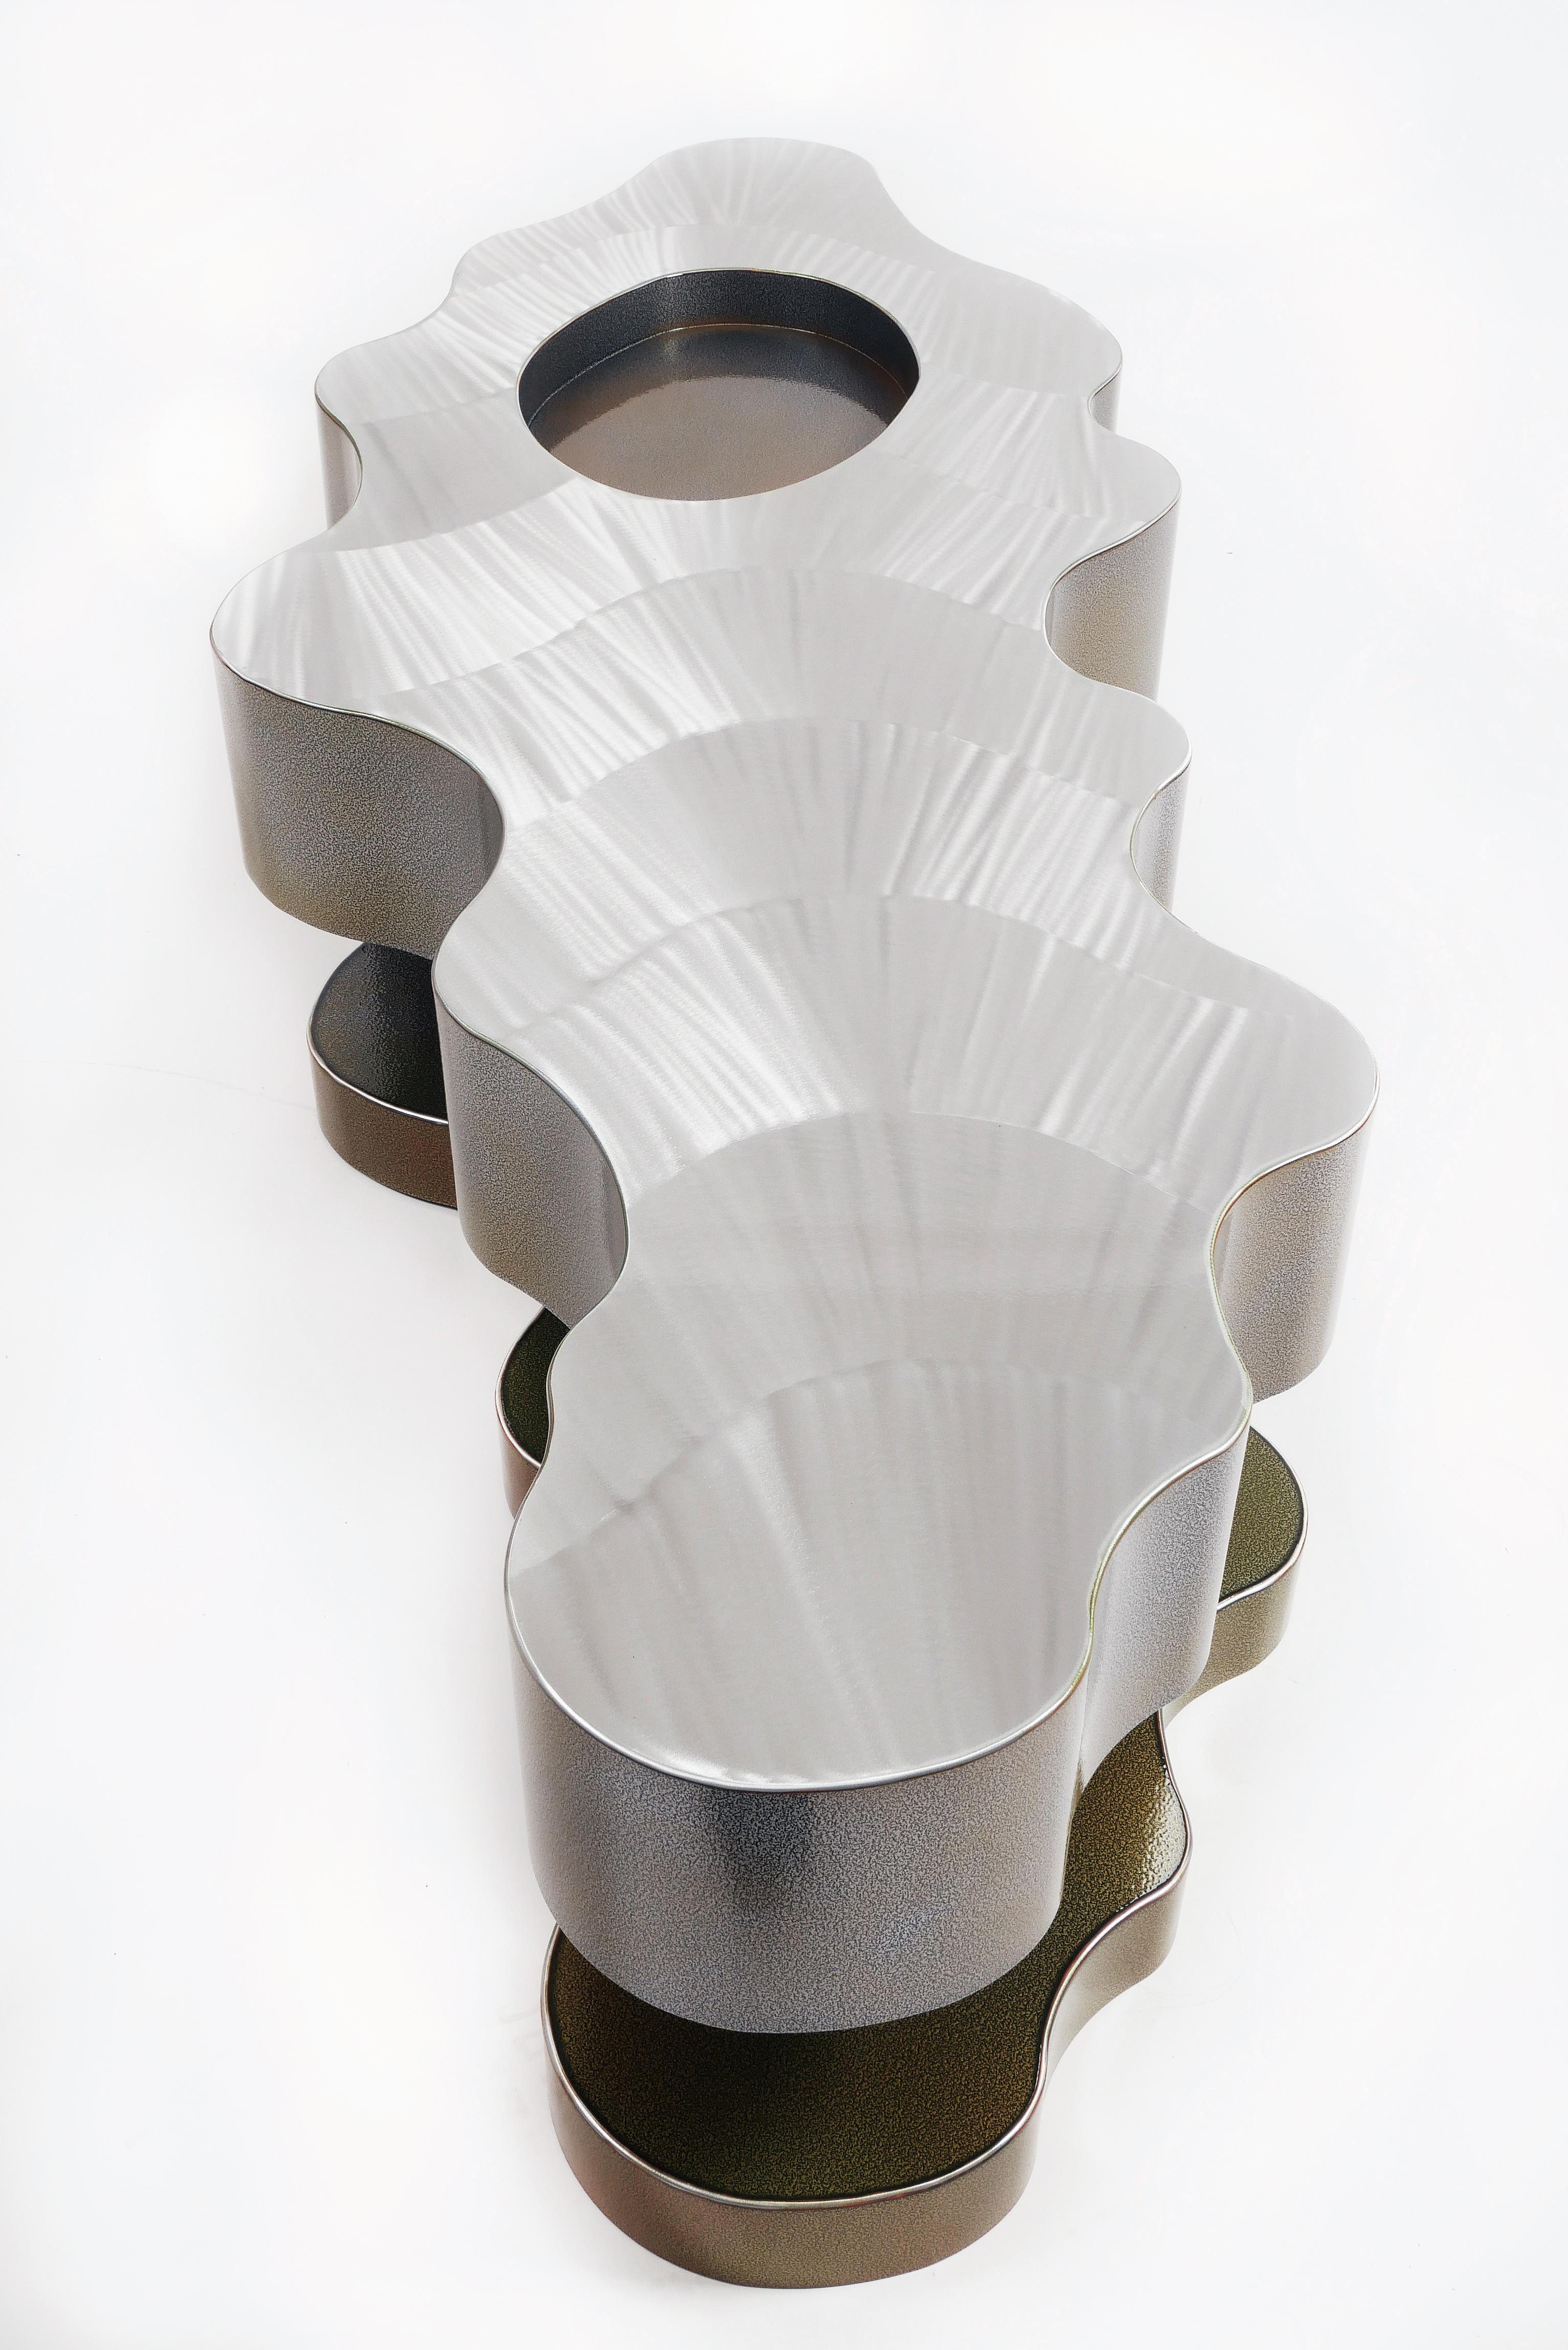 Postmoderne Table basse abstraite de forme libre du studio Bert Furnari en vente